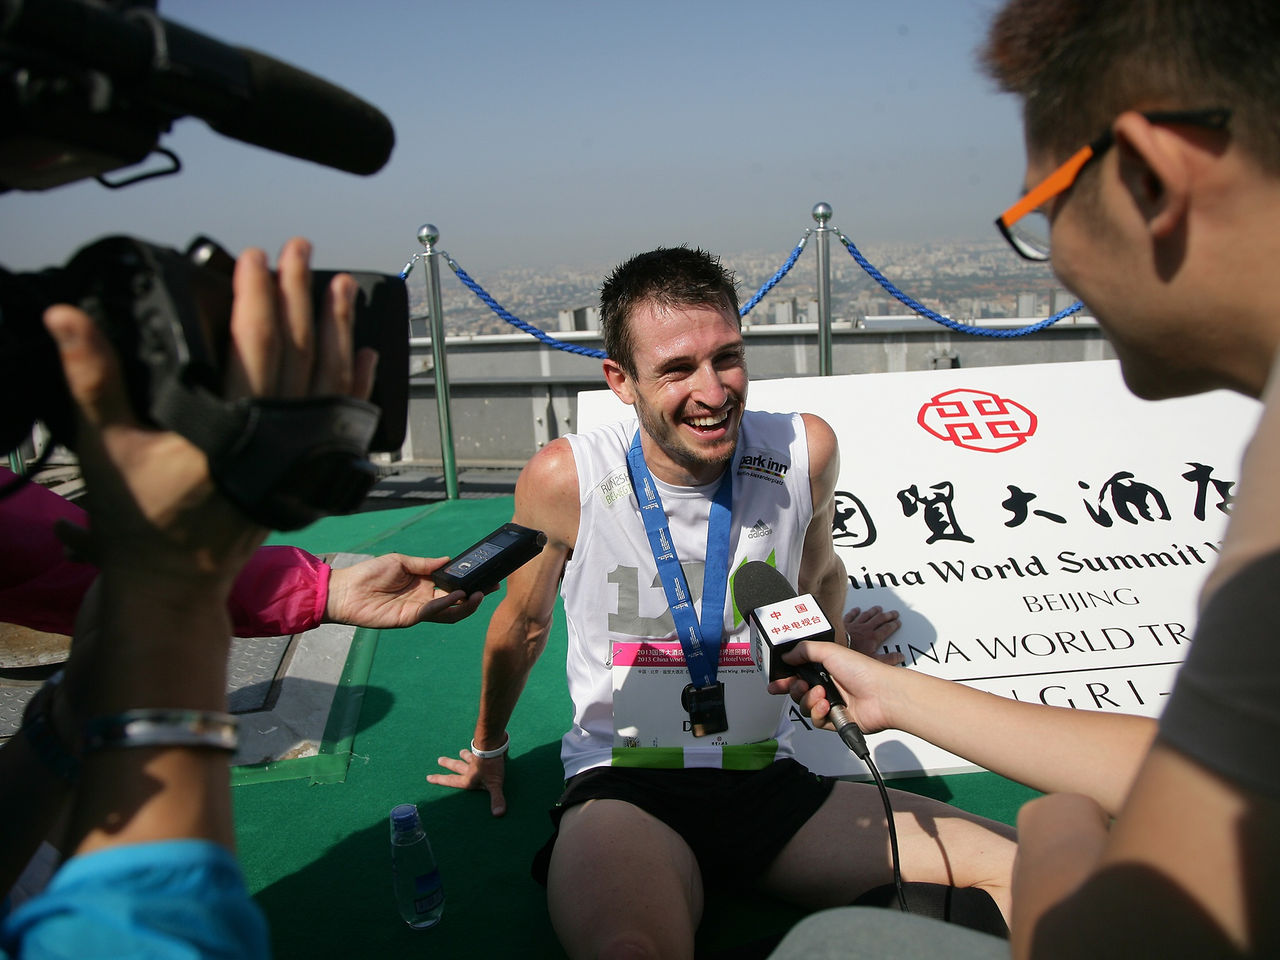 In 2013 Thomas Dold won the China World Summit Wing Hotel Vertical Run in Beijing. Photo: China World Summit Wing